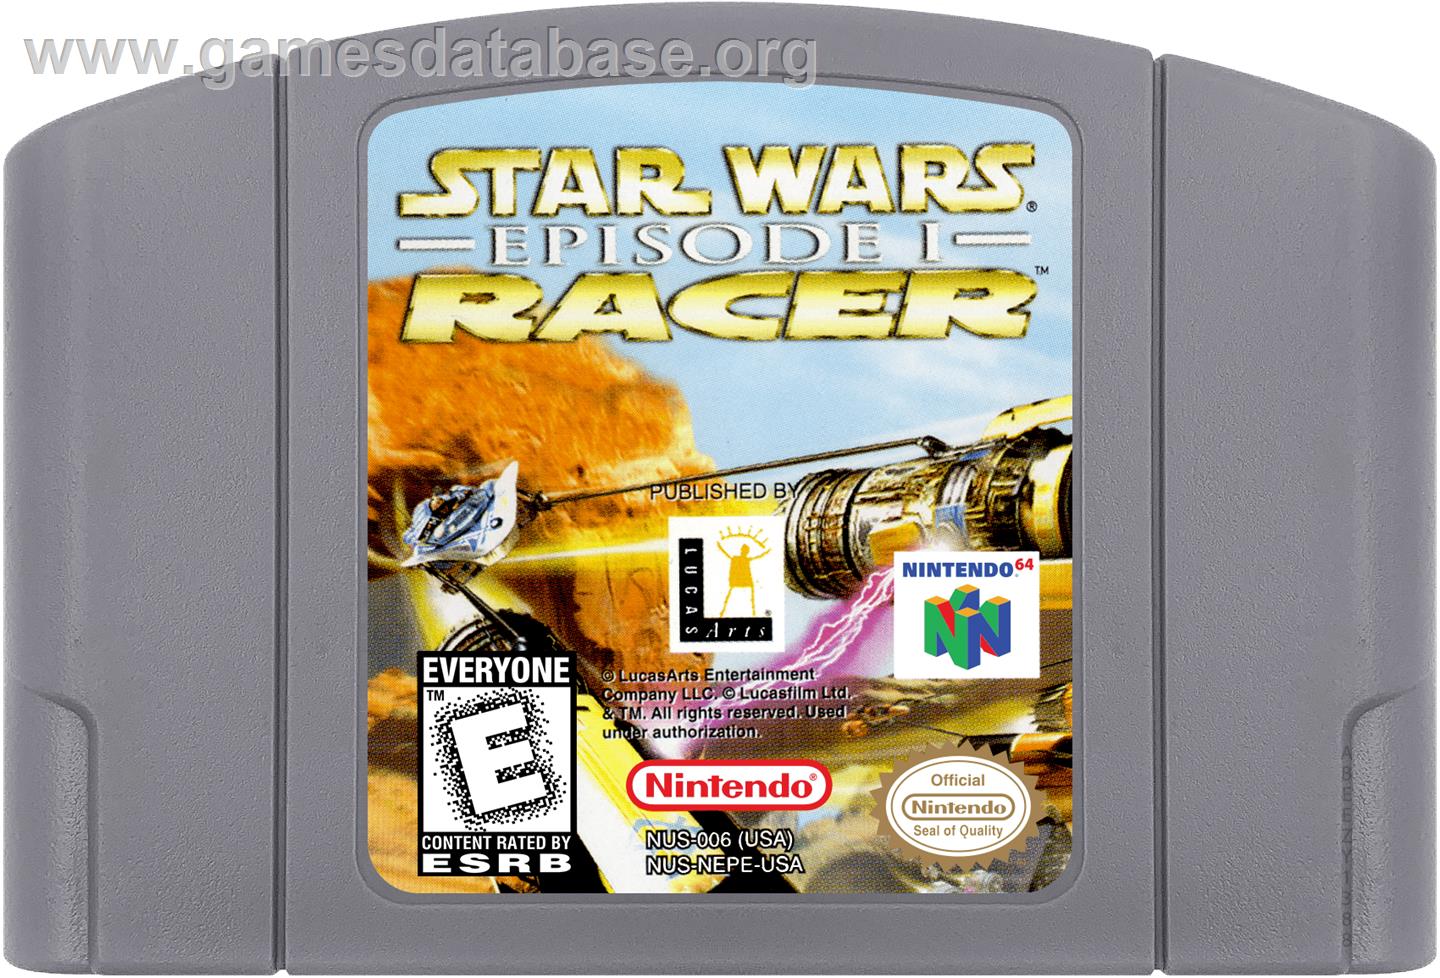 Star Wars: Episode I - Racer - Nintendo N64 - Artwork - Cartridge